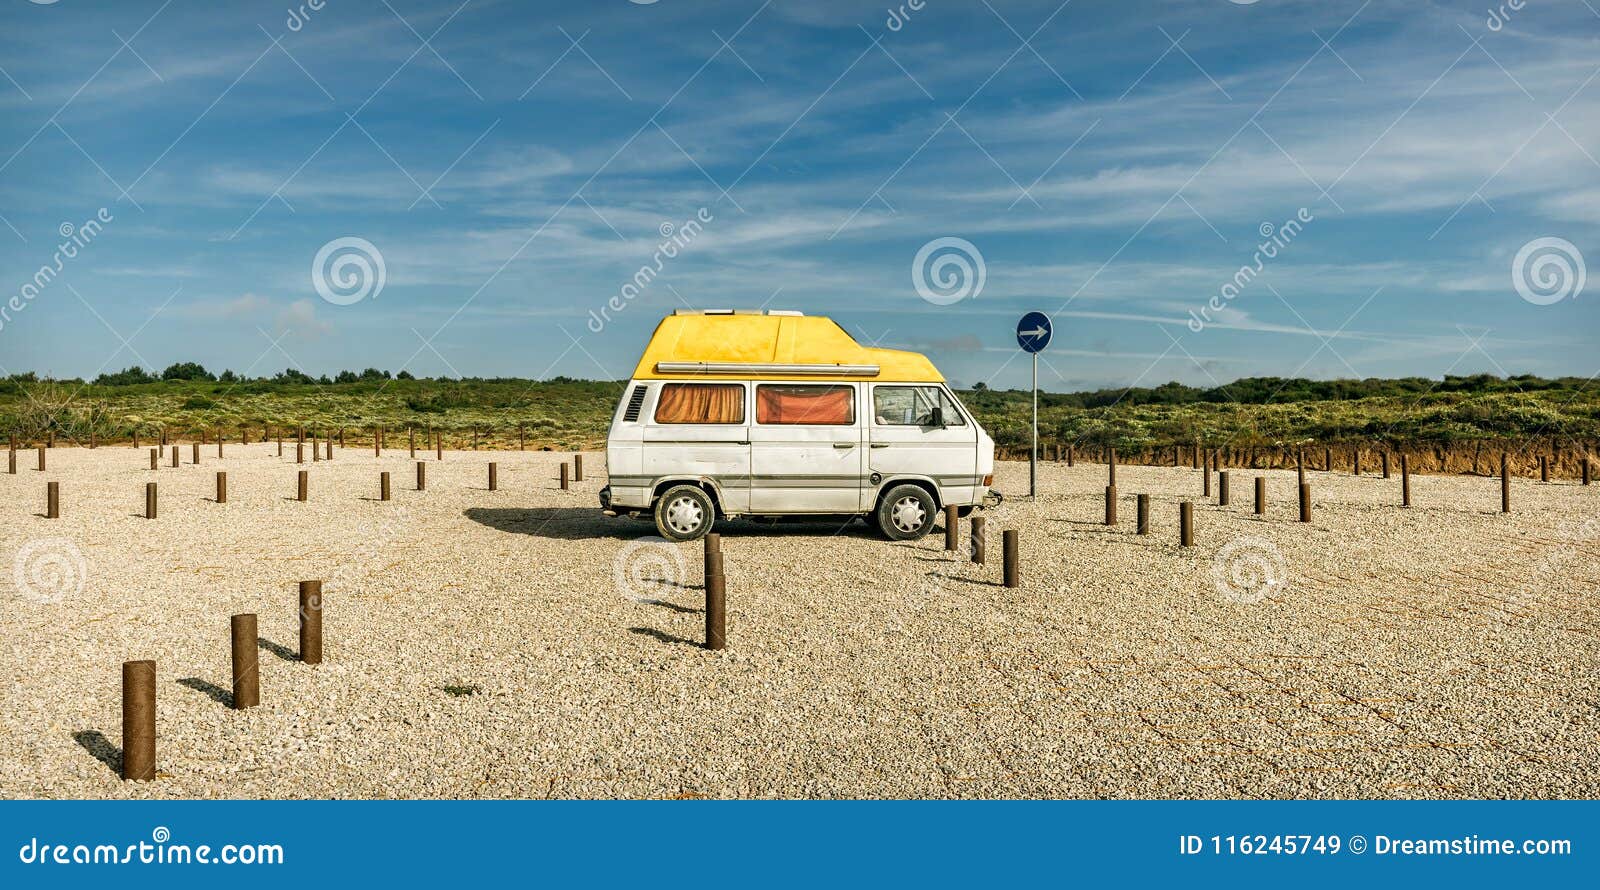 old beach van at a beach parking lot